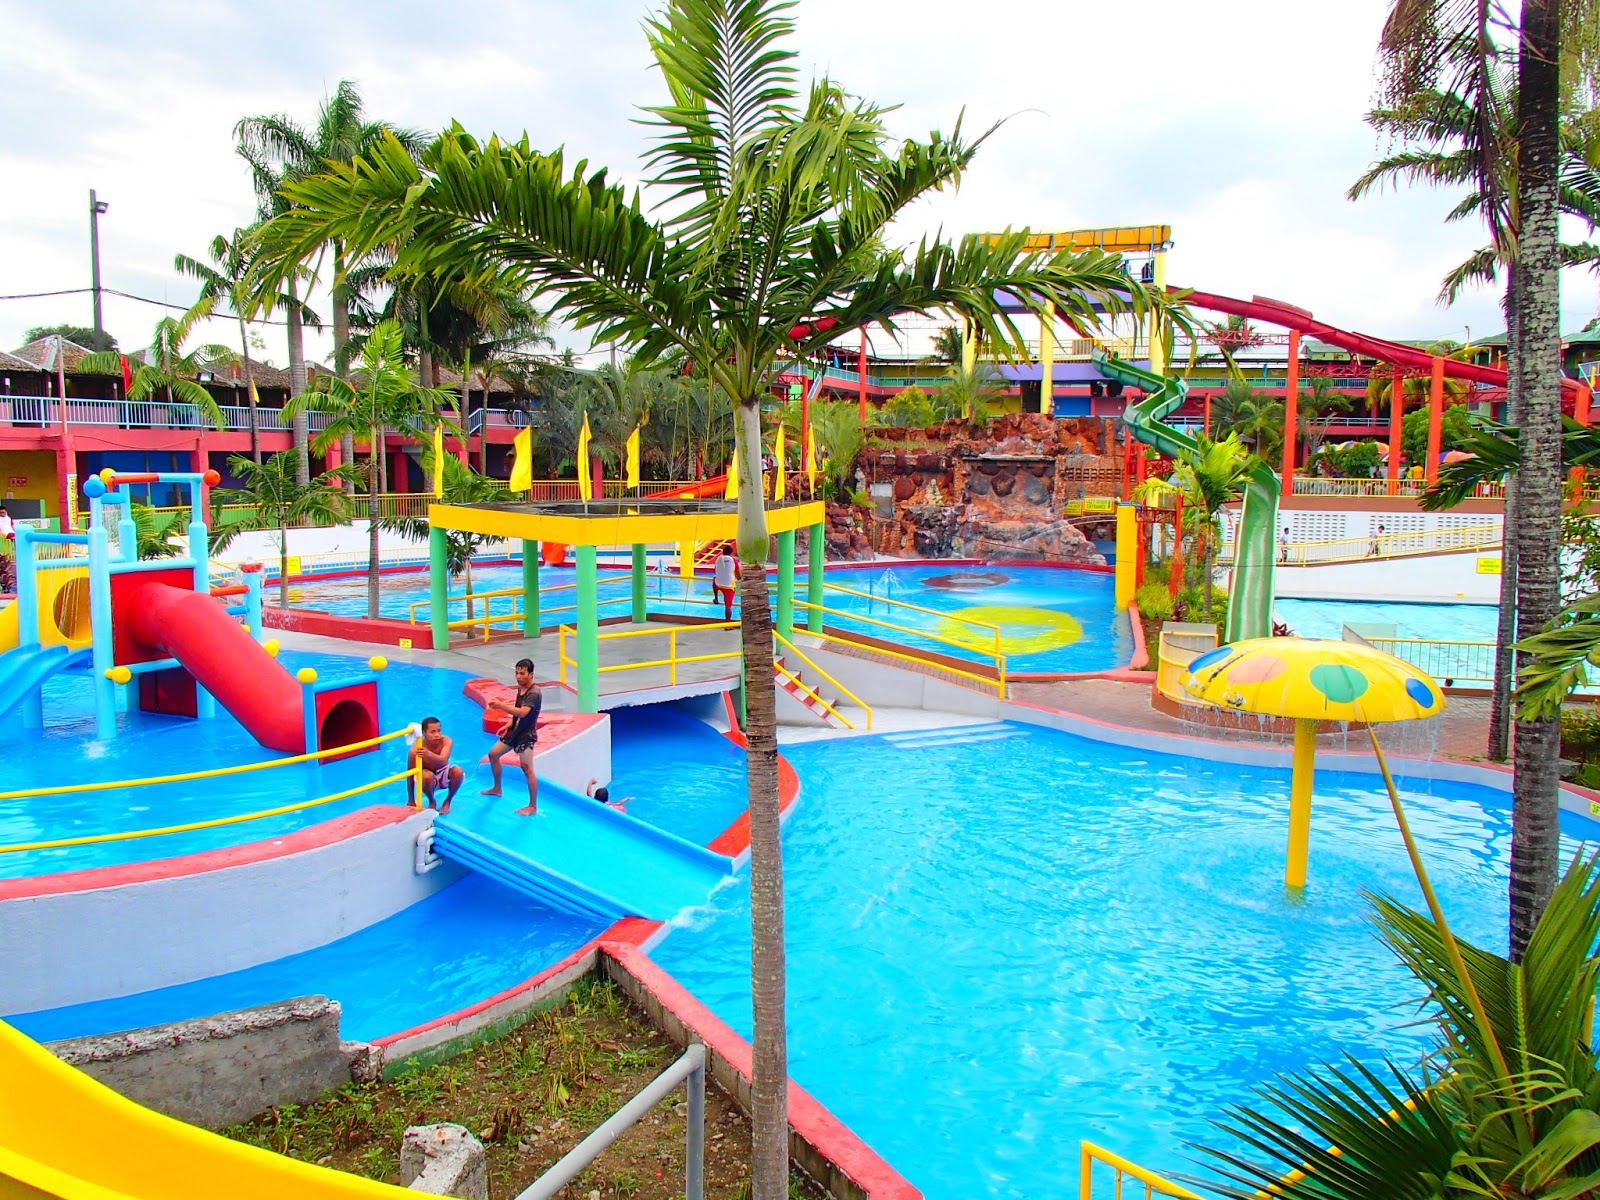 Volet's Resort, Dasmarinas City, Cavite